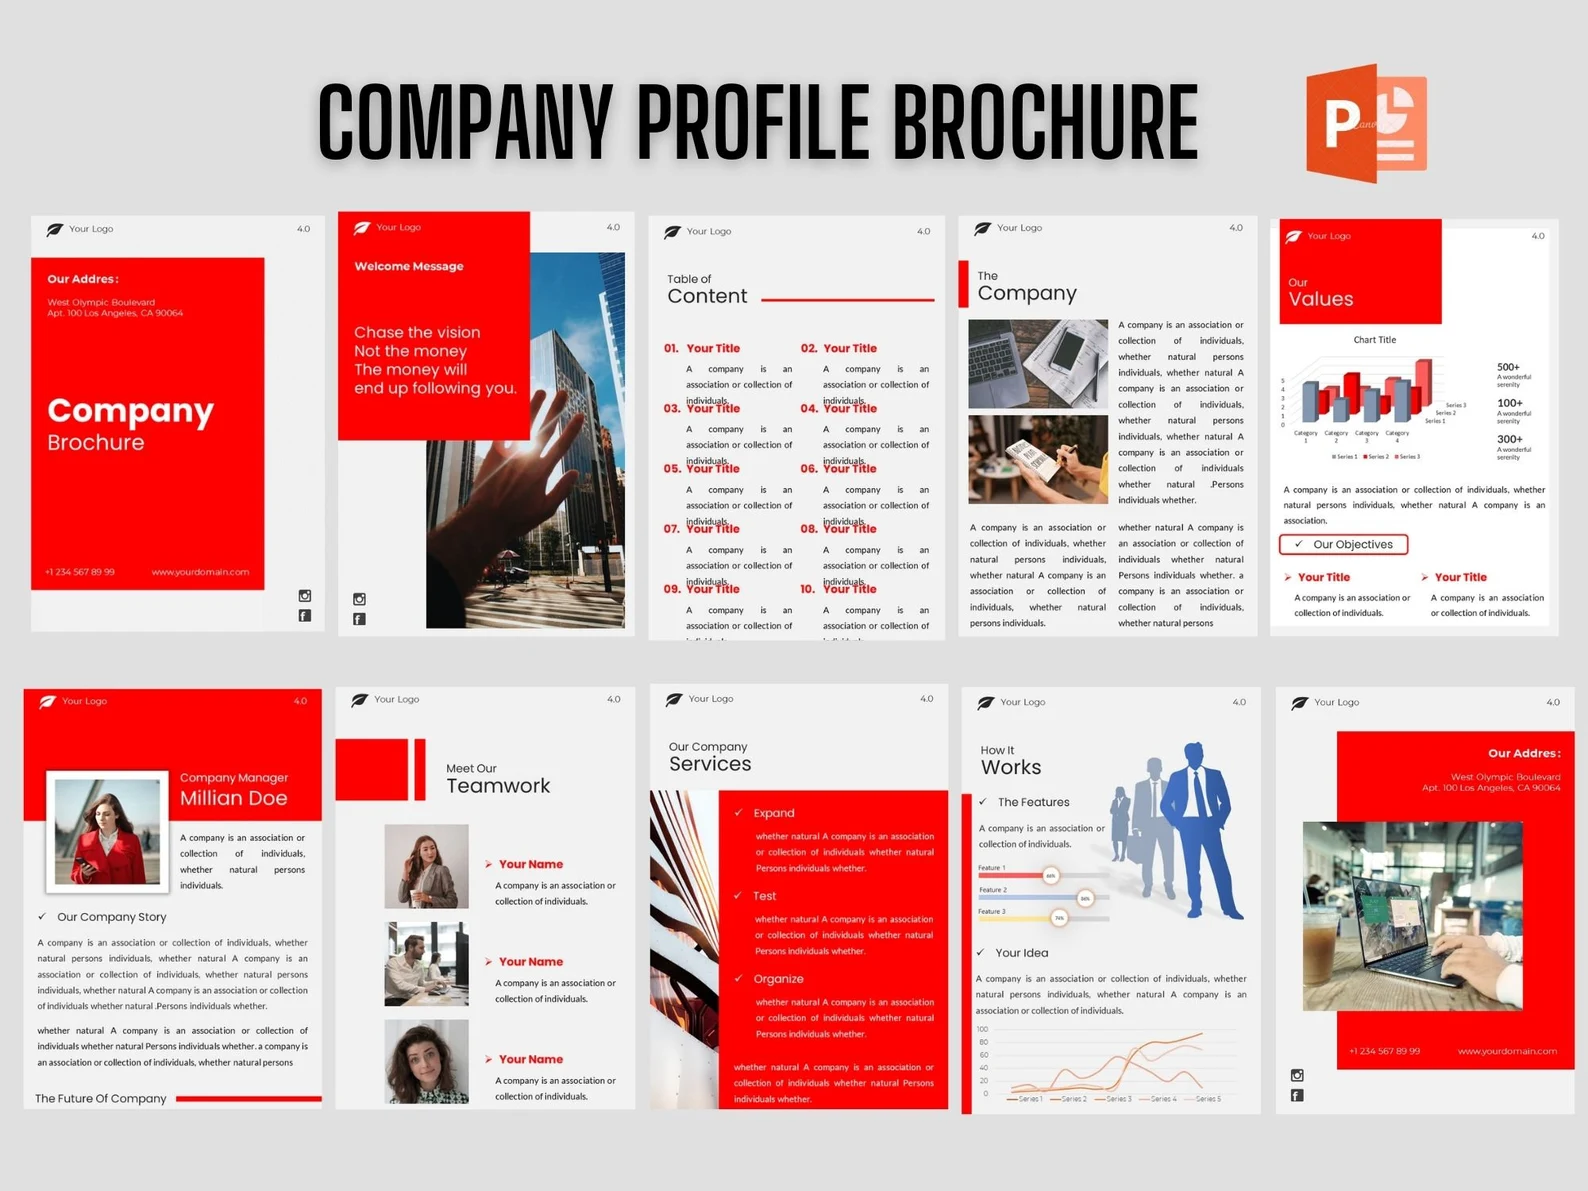 Company profile brochure in red.